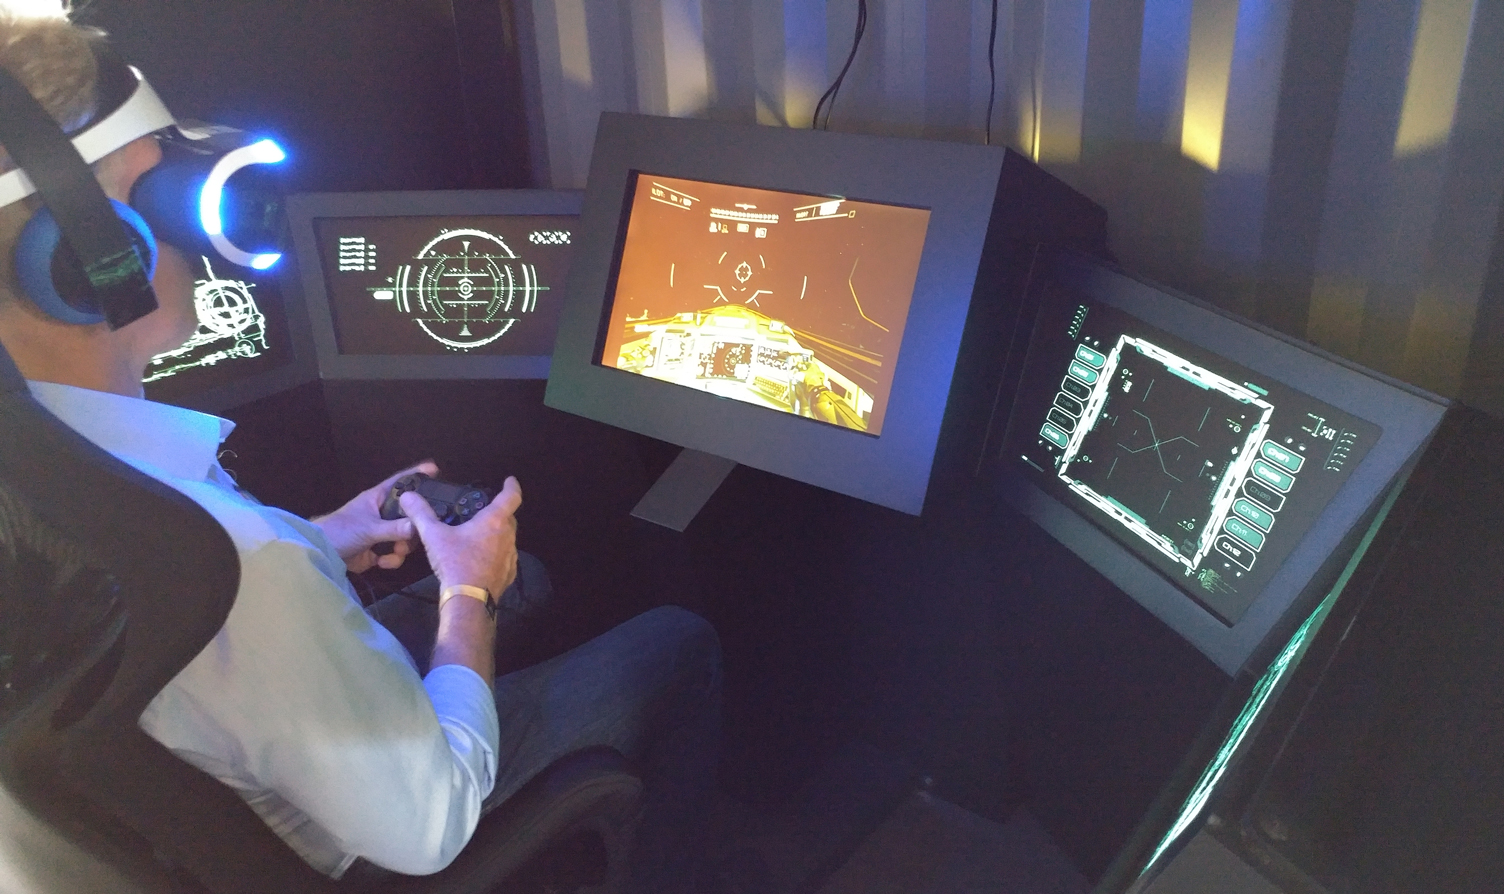 Call of Duty XP Infinite Warfare PlayStation VR Jackal Assault Demo Station Cockpit